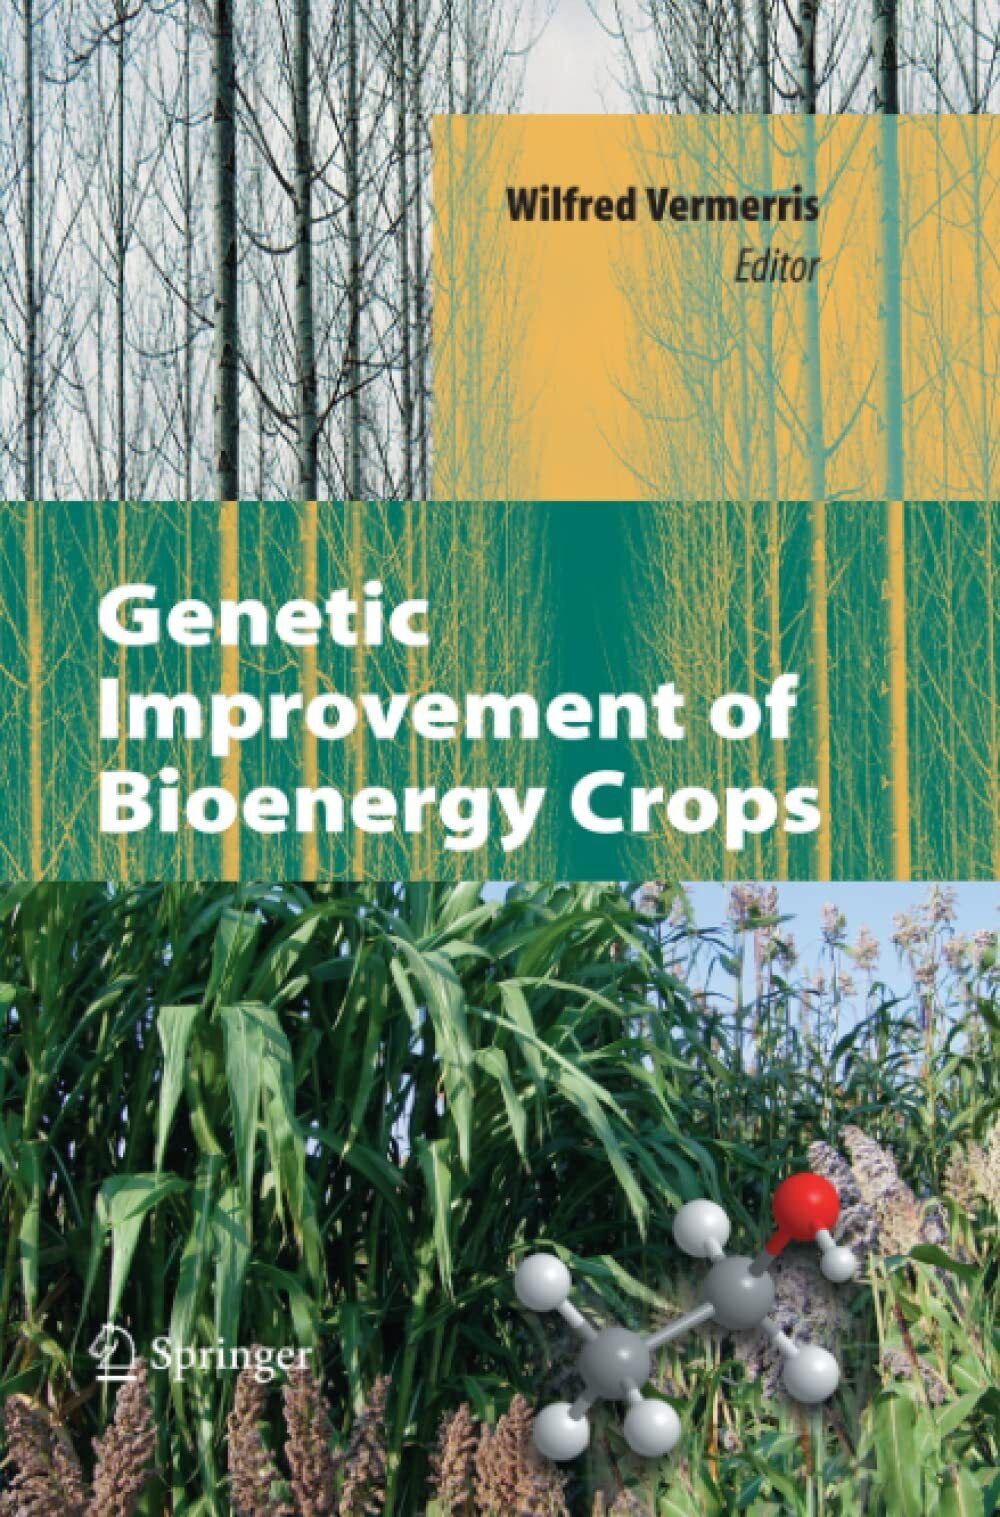 Genetic Improvement of Bioenergy Crops - Wilfred Vermerris - Springer, 2010